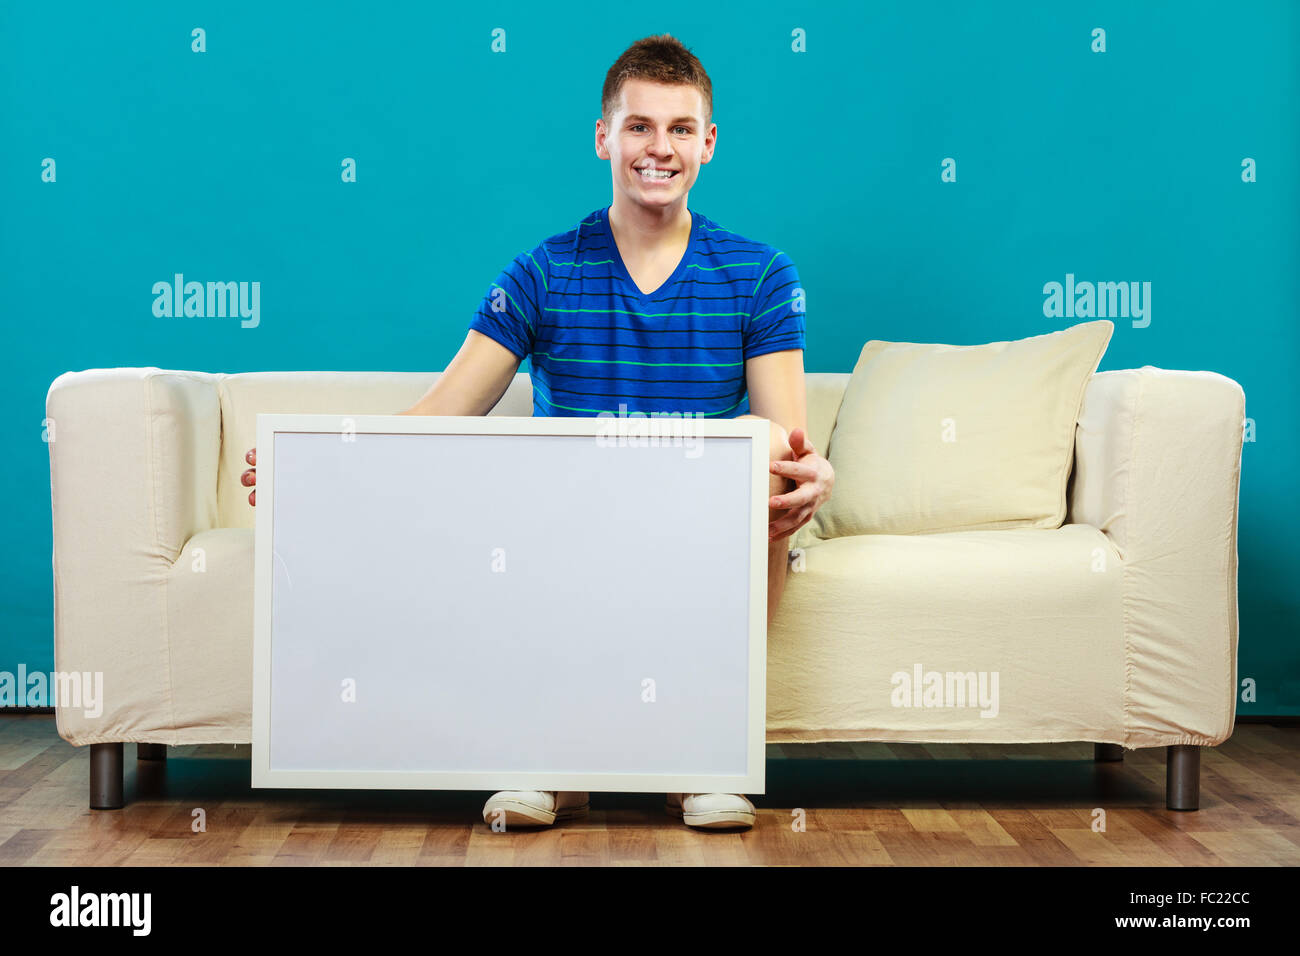 man on sofa holding blank presentation board Stock Photo